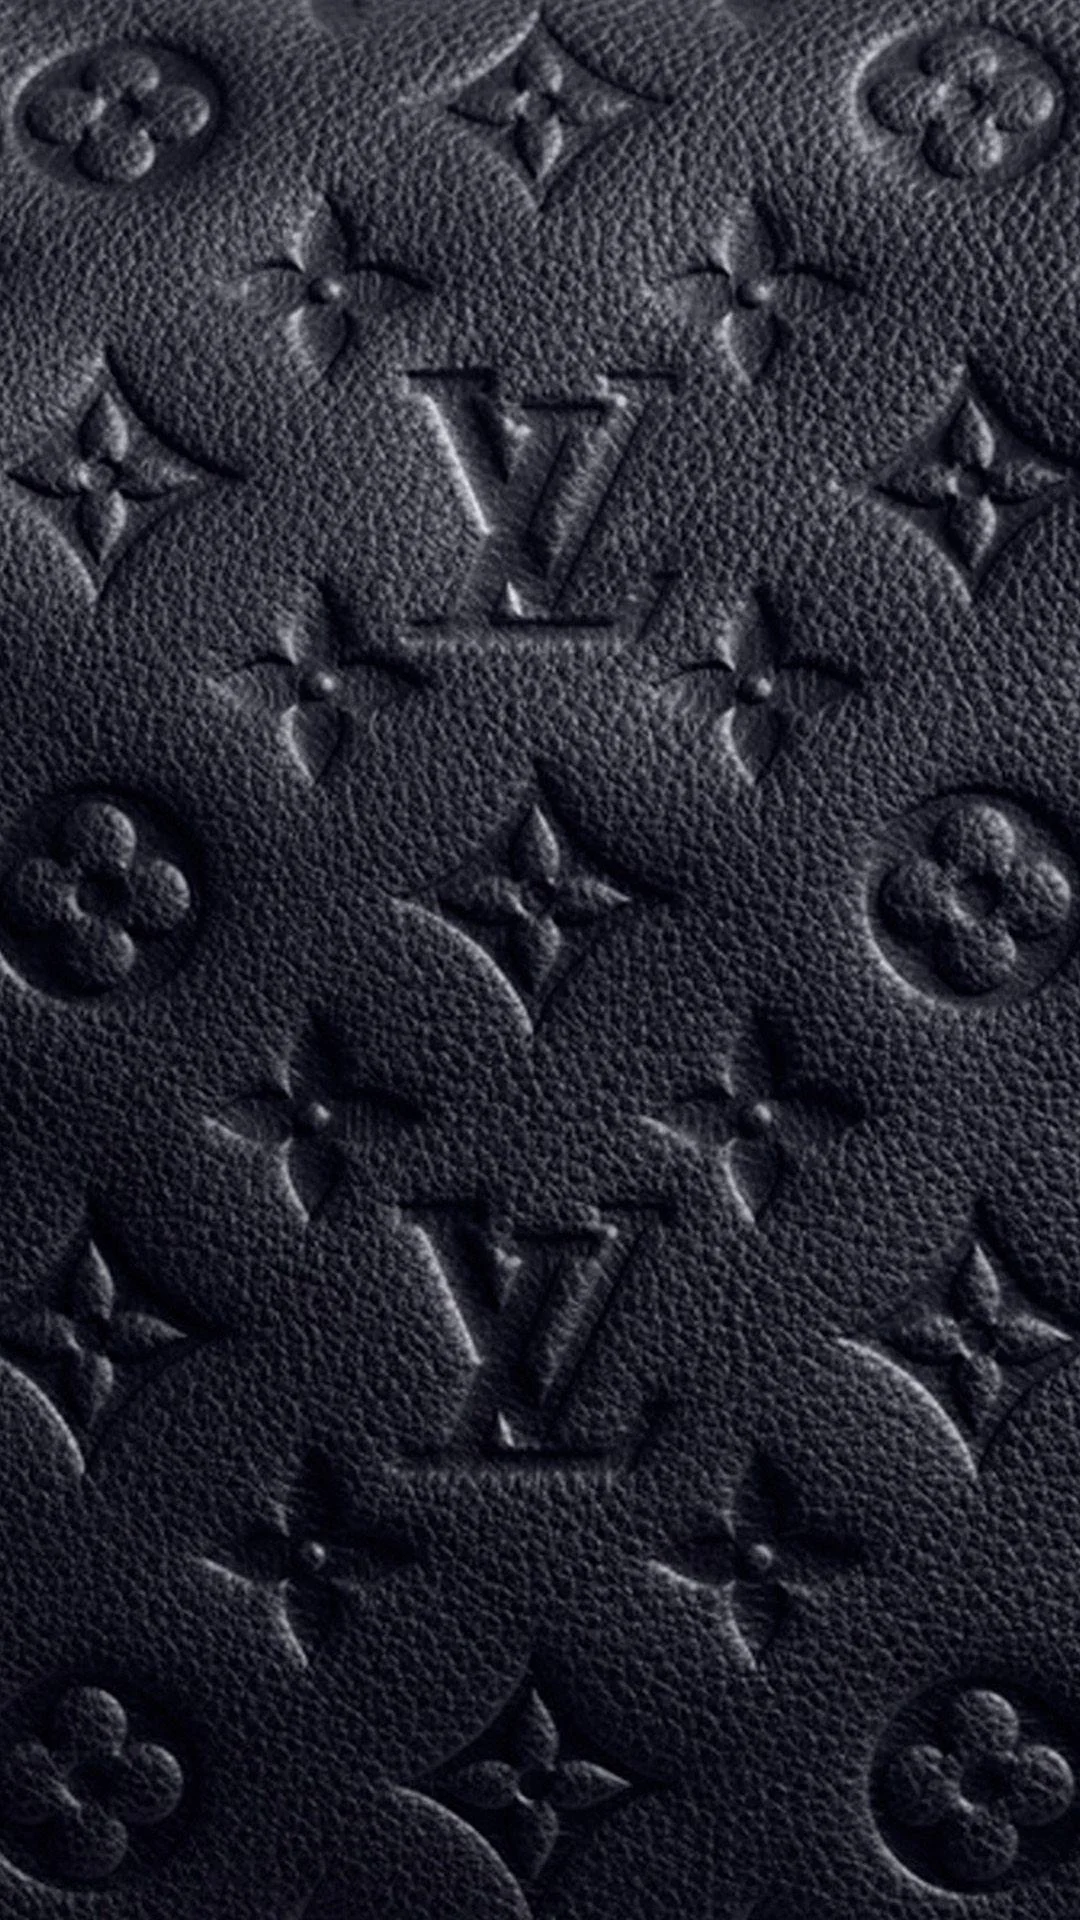 HD Louis Vuitton Wallpaper